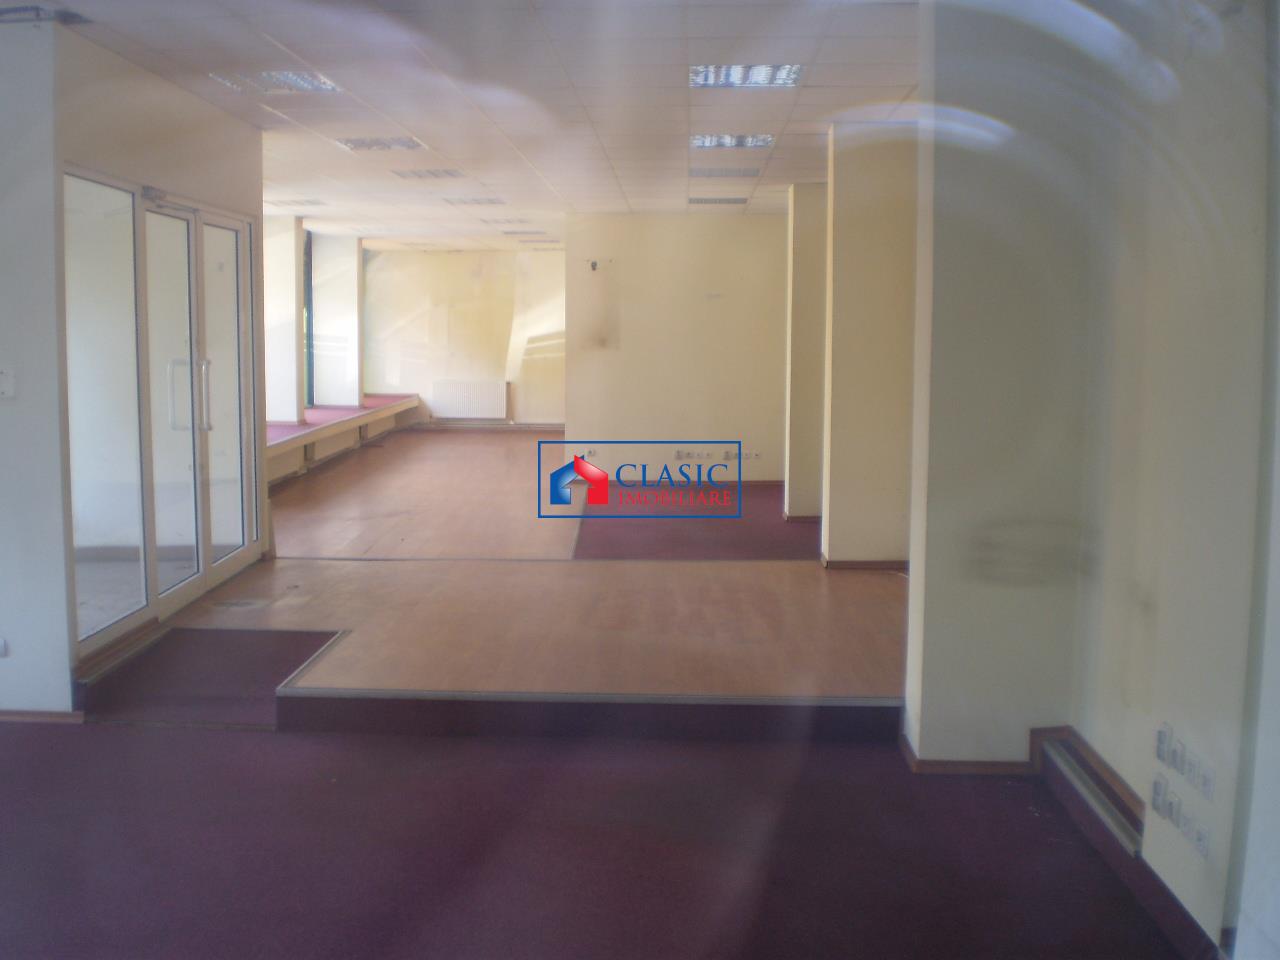 Inchiriere spatiu comercial sau birouri situat central, 300 mp, Cluj Napoca